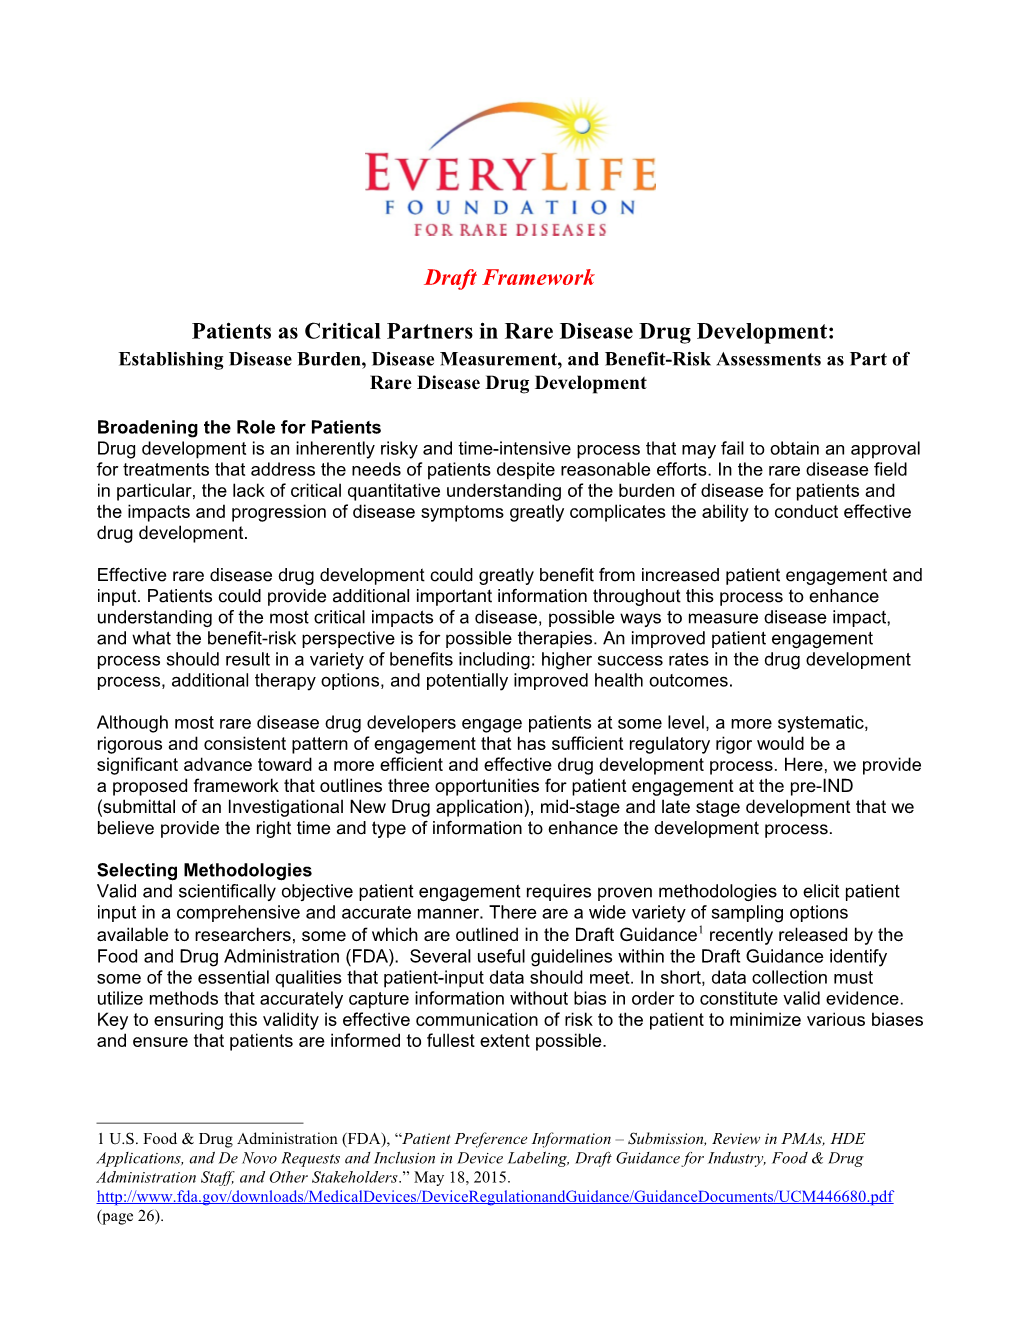 Patients As Critical Partners in Rare Disease Drug Development